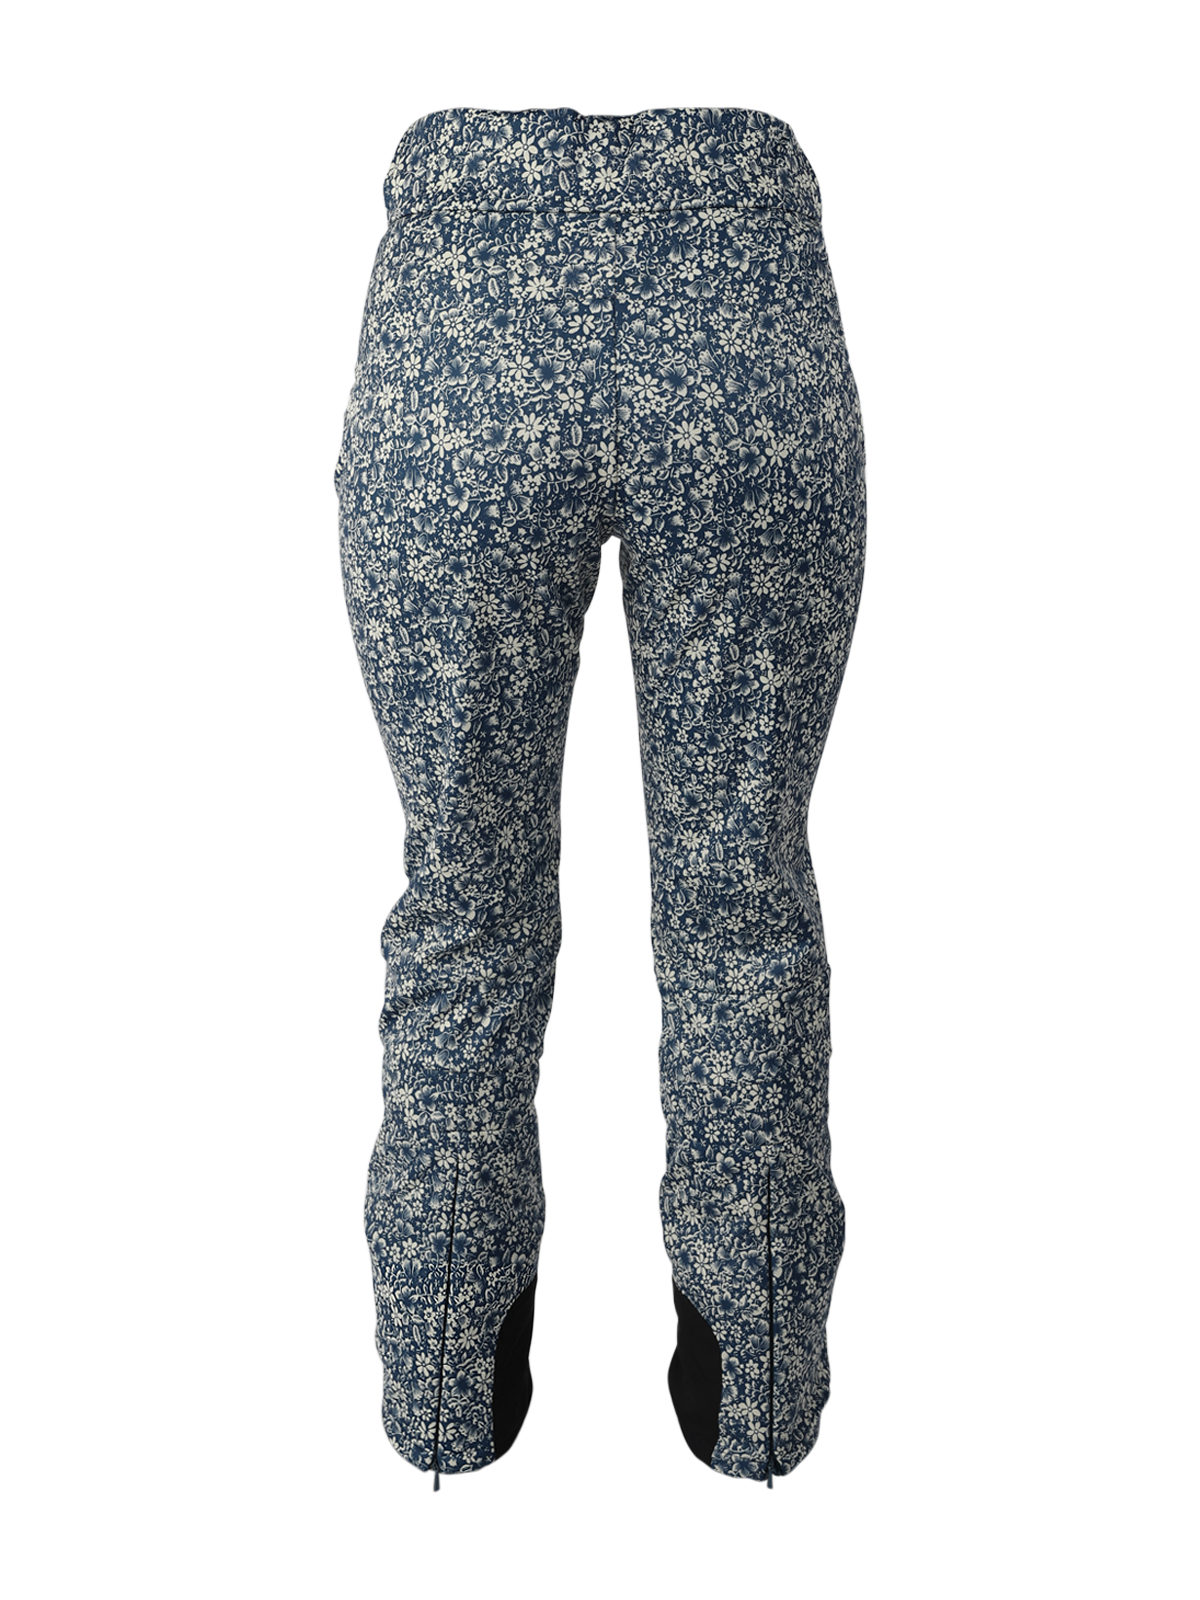 Sunpeak-AO Women Softshell Snow Pants | Blue